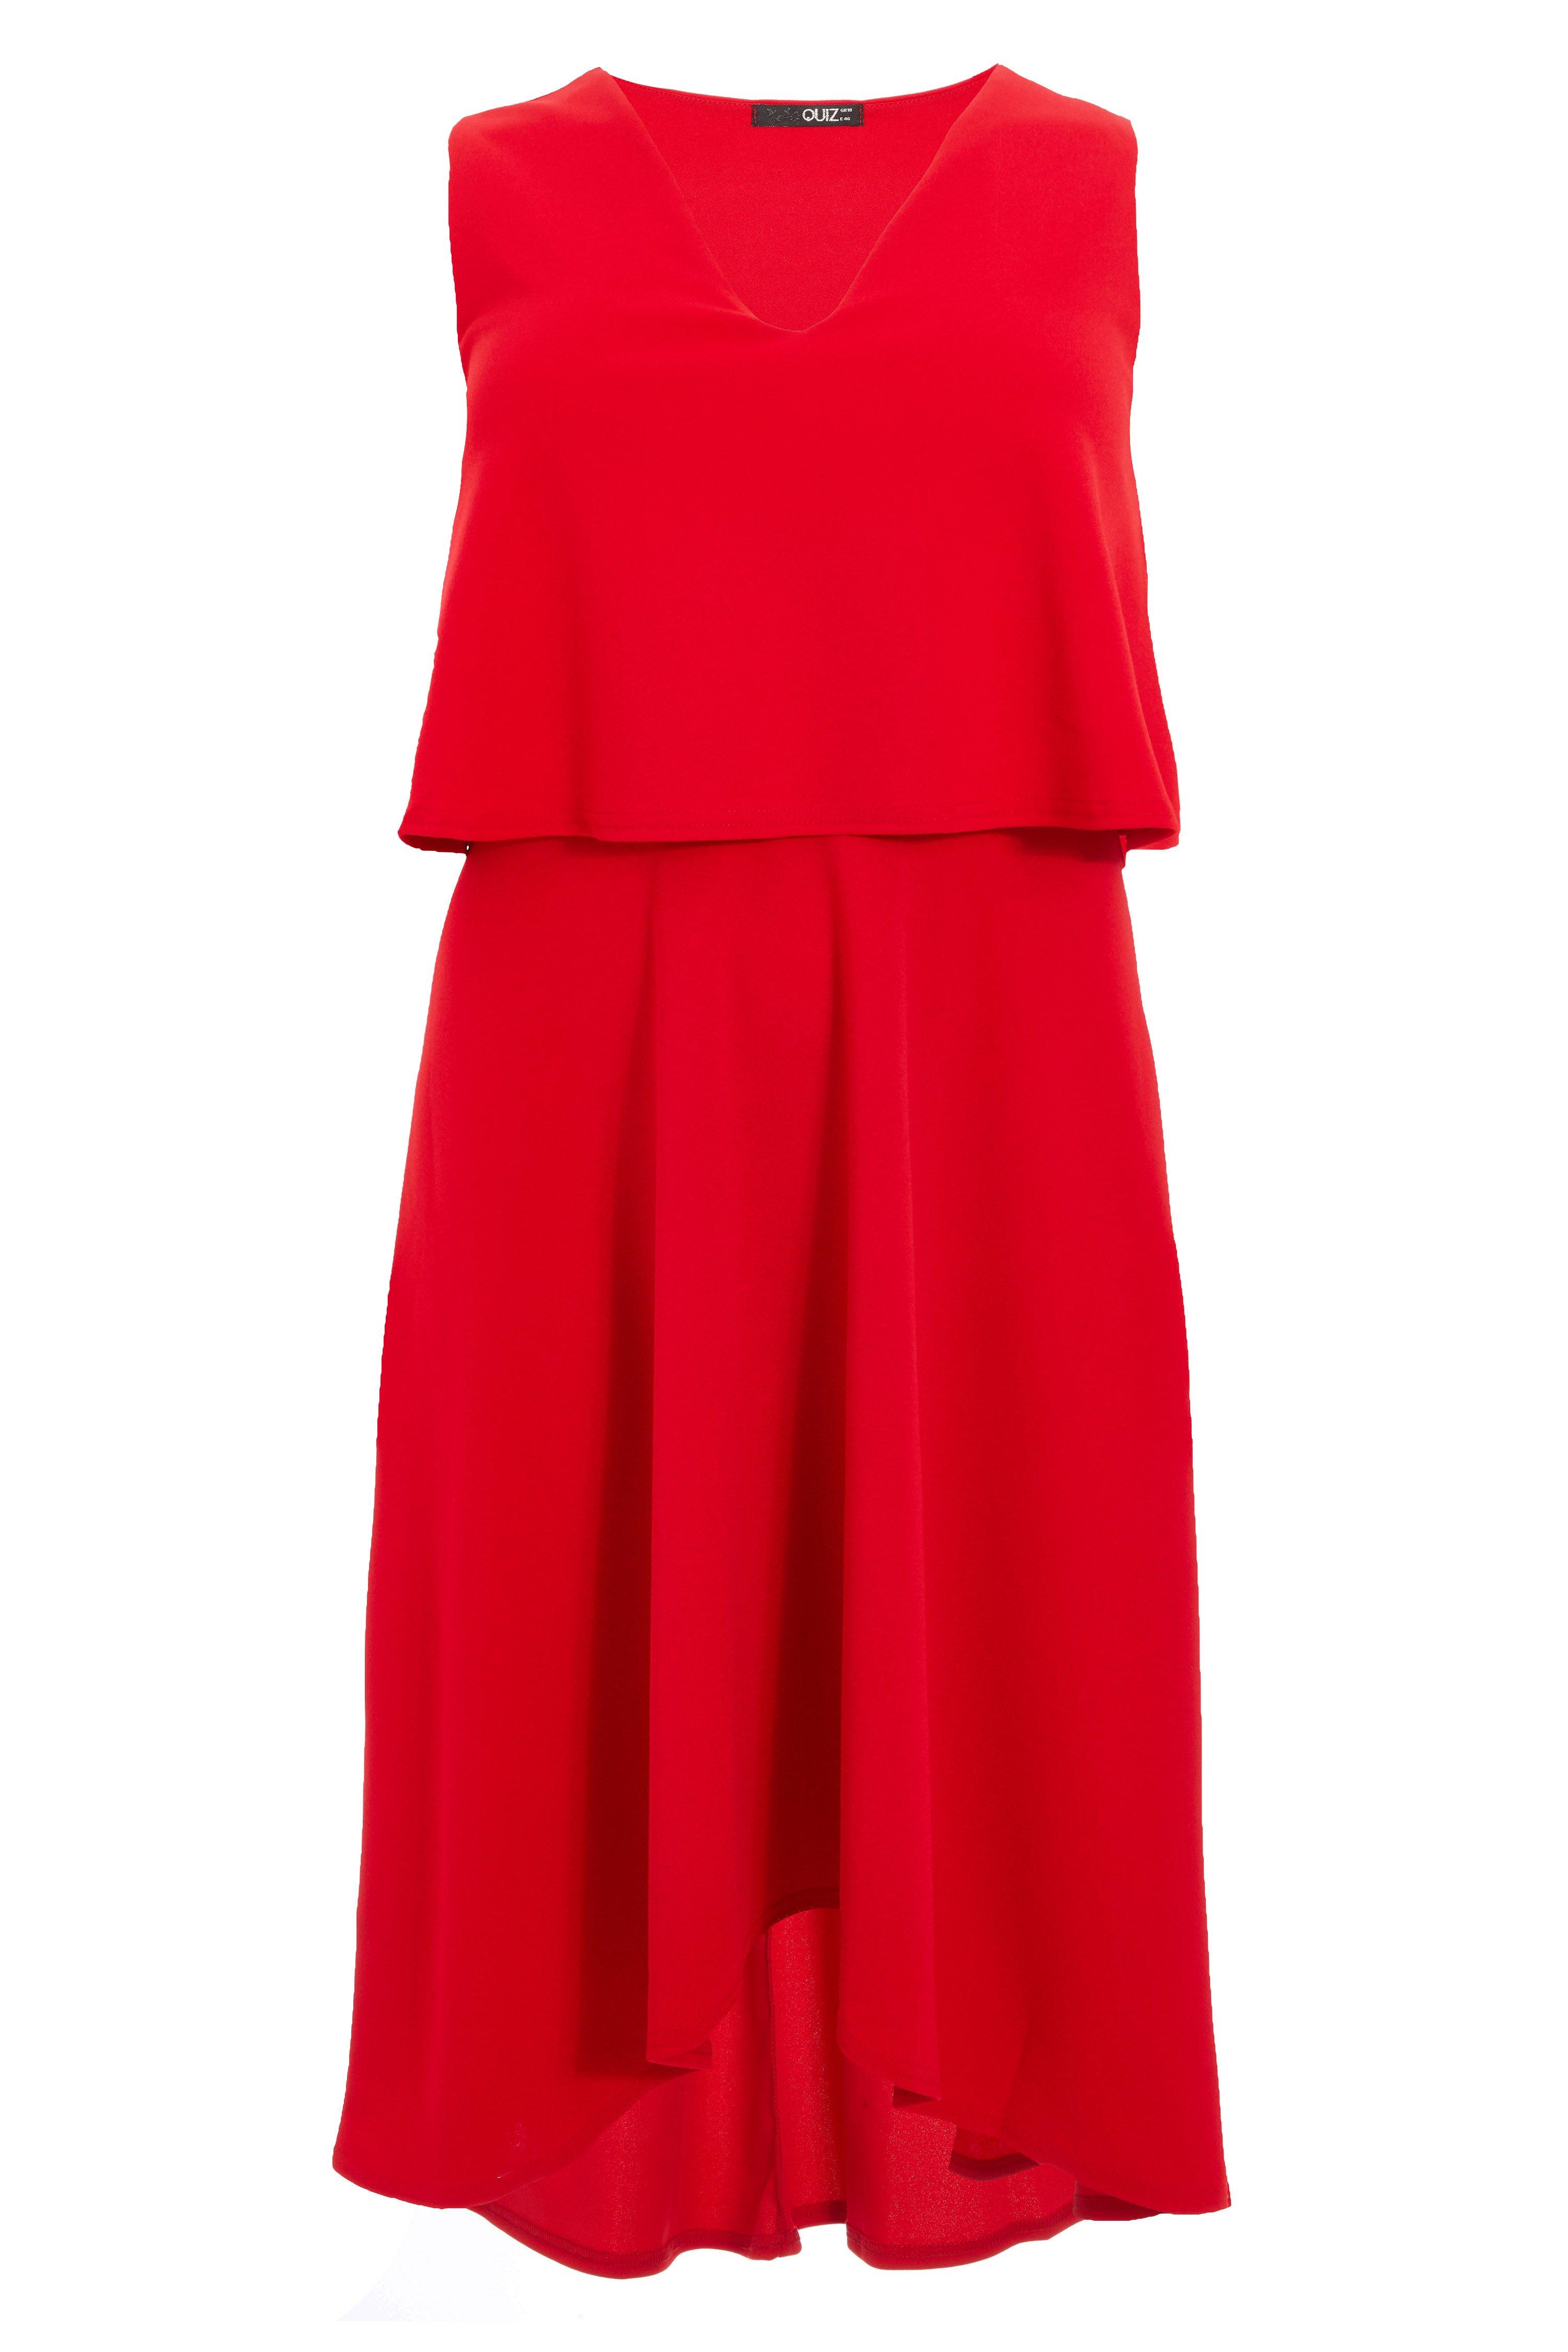 Curve Red Overlay Dip Hem Dress - Quiz Clothing